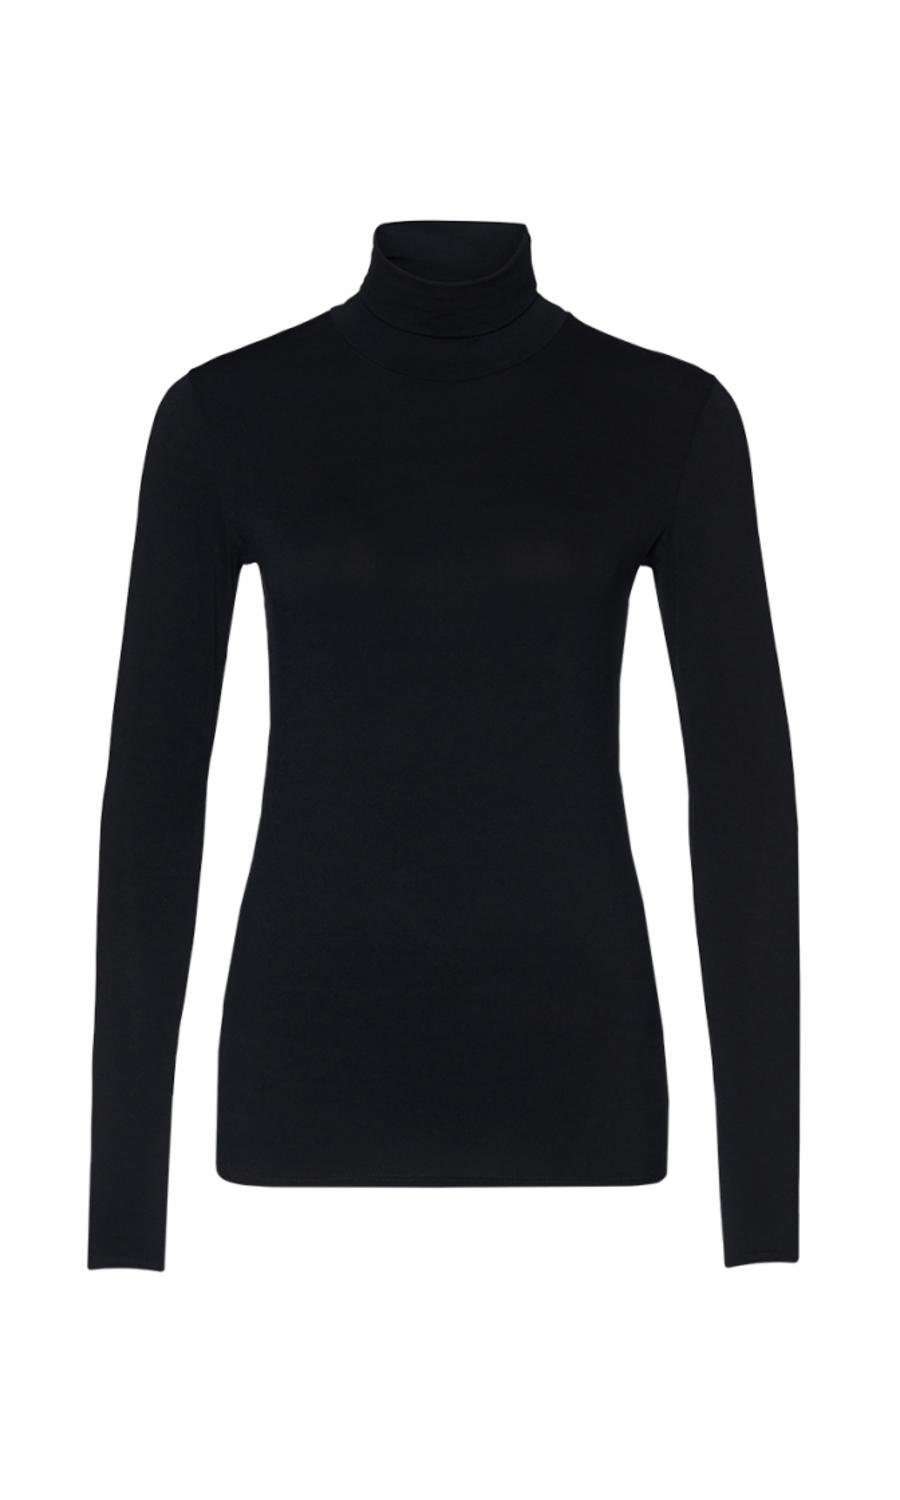 Рубашка-водолазка `Collection Essential` Женская мода премиум-класса Нежный свитер-водолазка